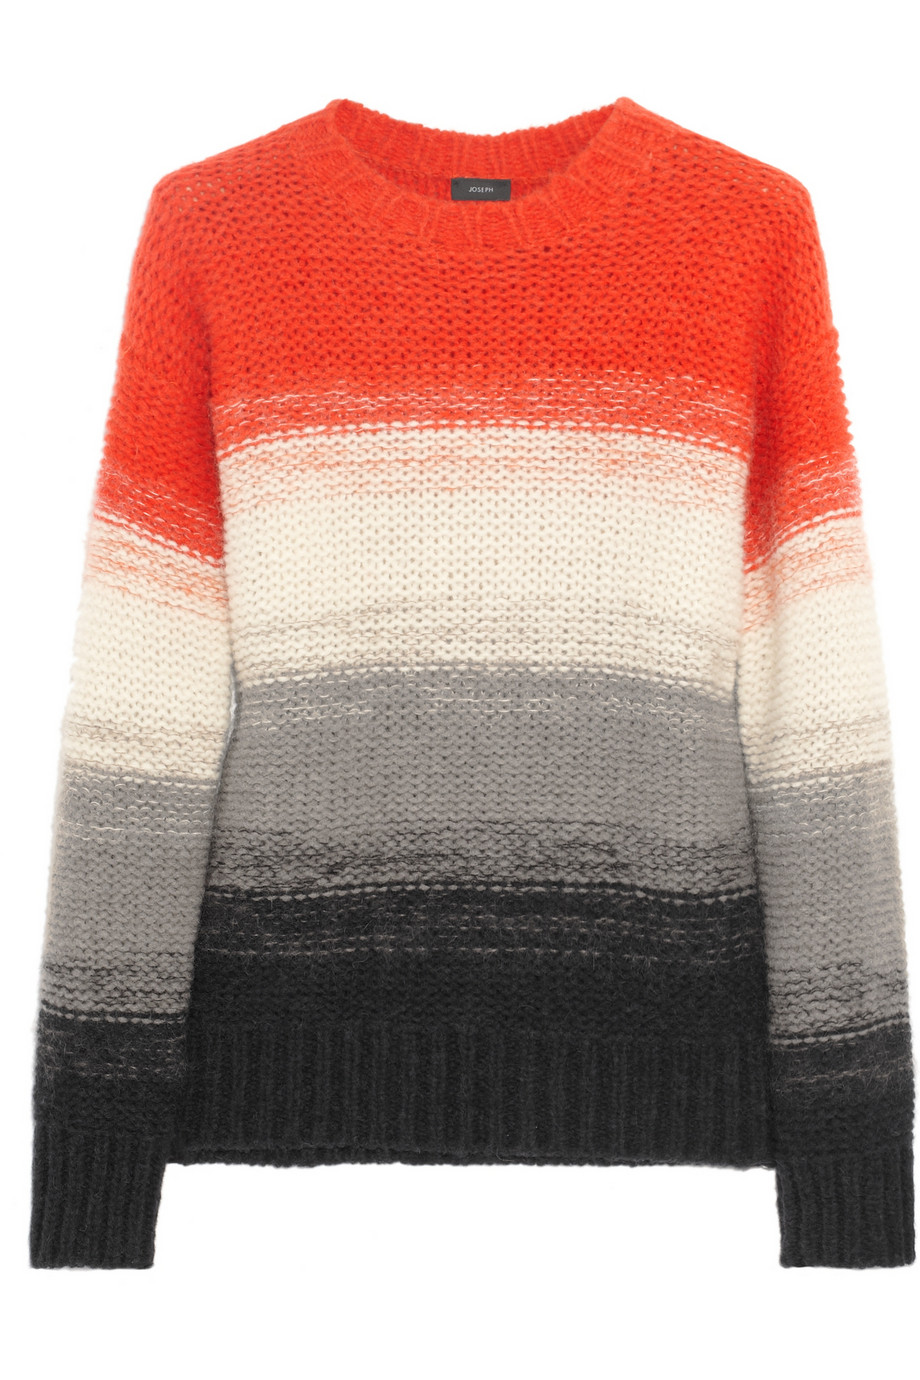 Lyst - Joseph Colorblock Sweater